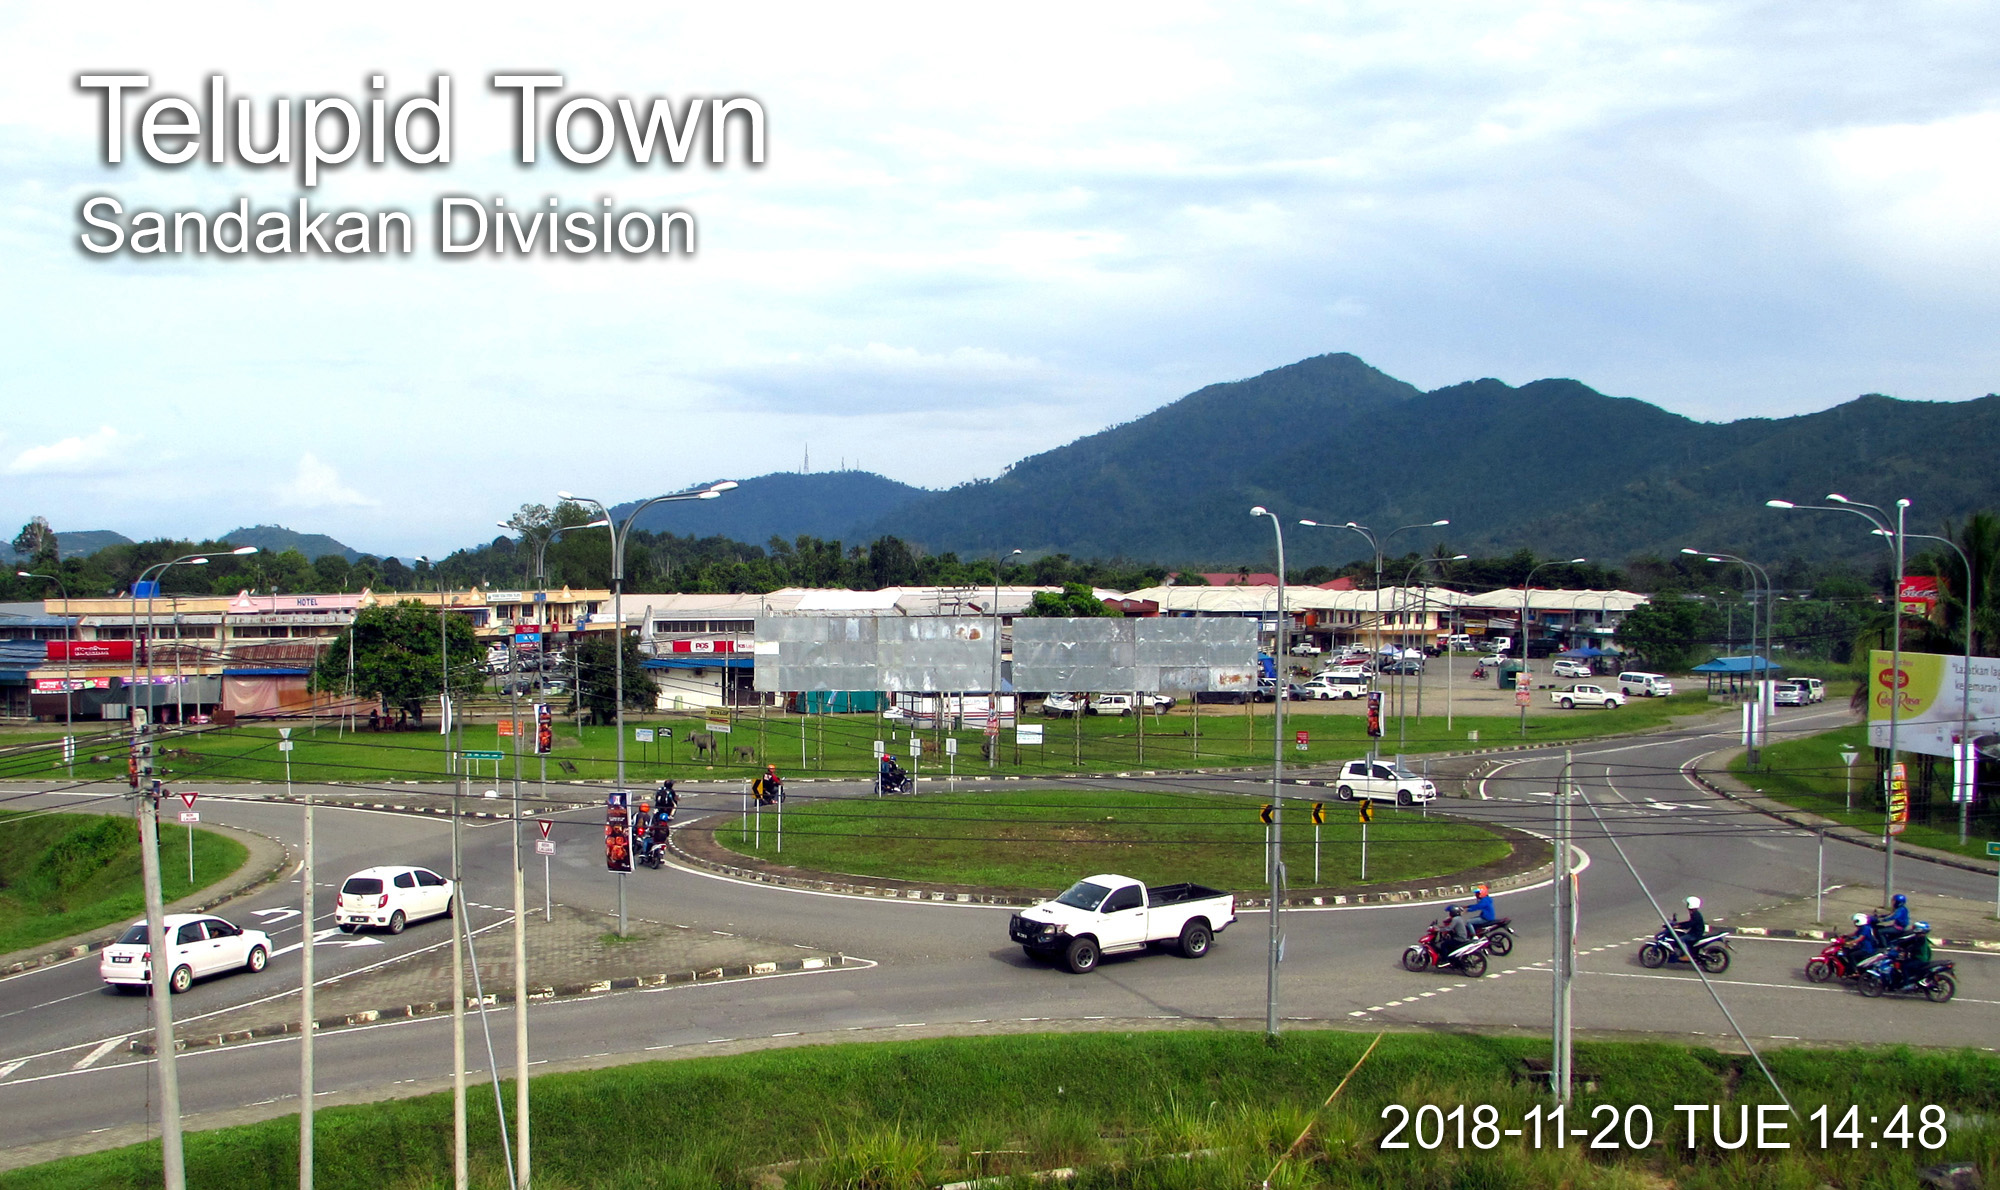 Telupid Town, Sandakan Division